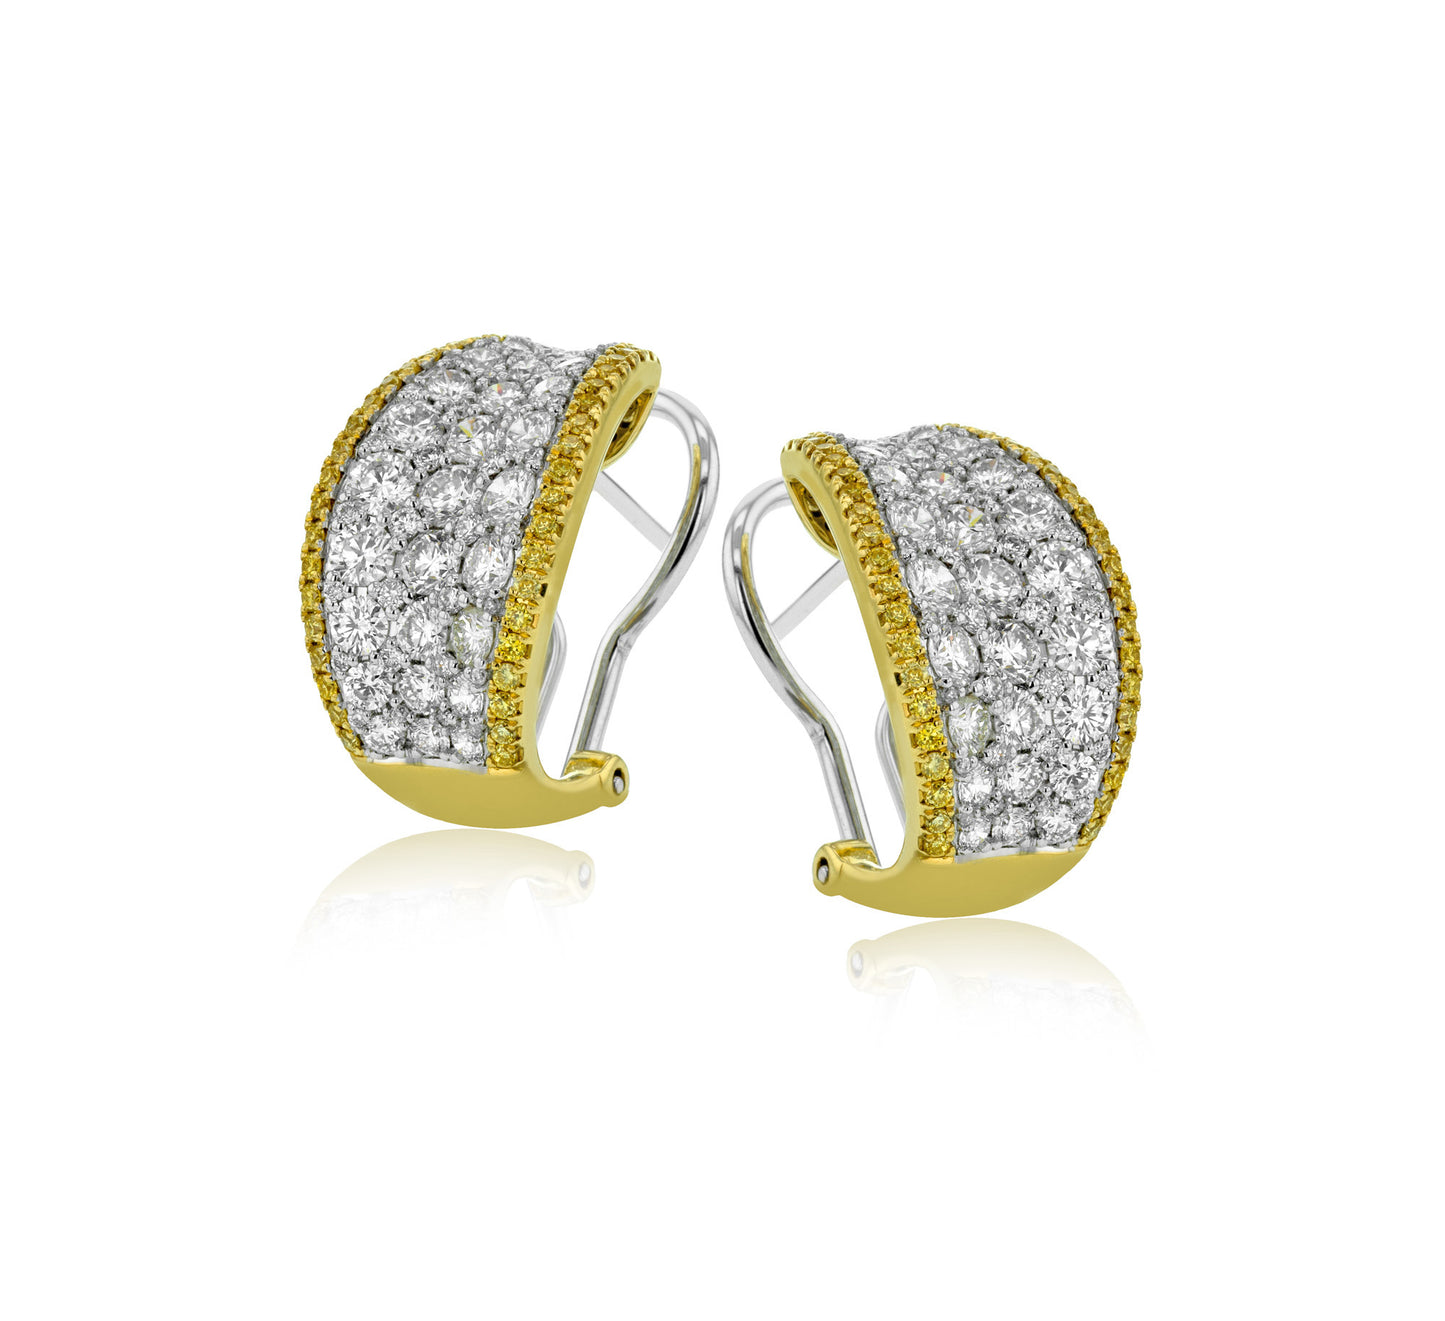 Simon G. "Simon Set" Two Tone Diamond Earrings